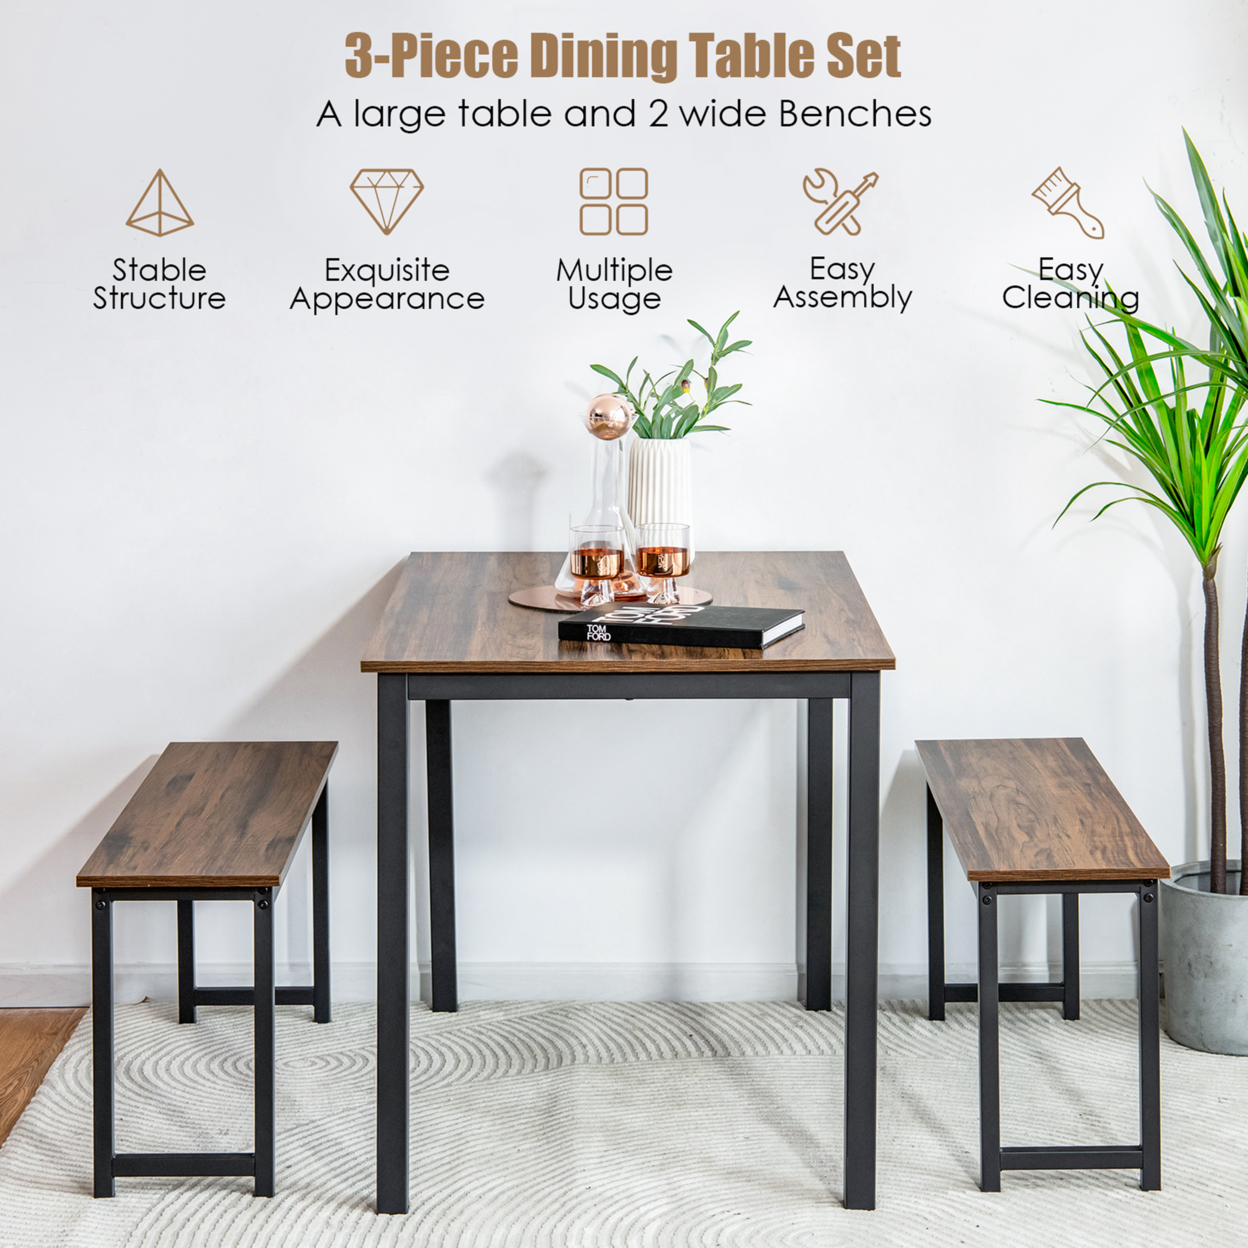 Modern 3 PCS Dining Table Bench Set W/ Metal Frame & Wooden Tabletop - Natural